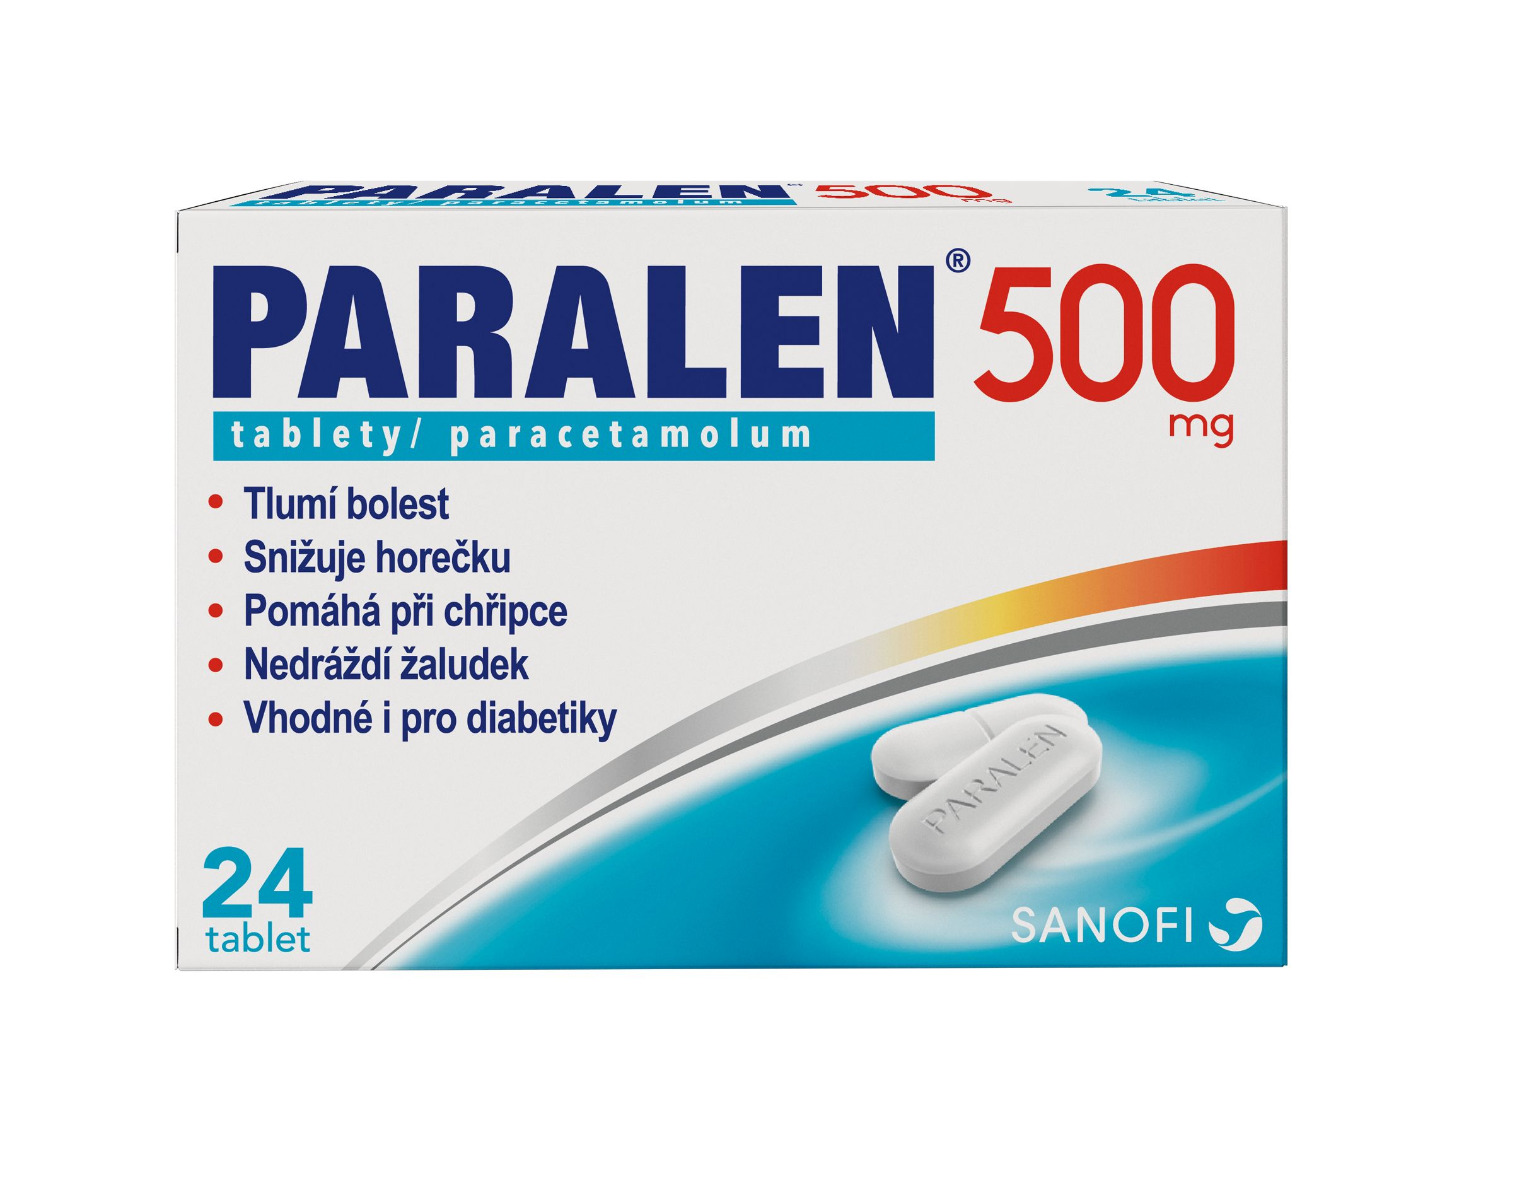 Paralen 500 mg 24 tablet Paralen